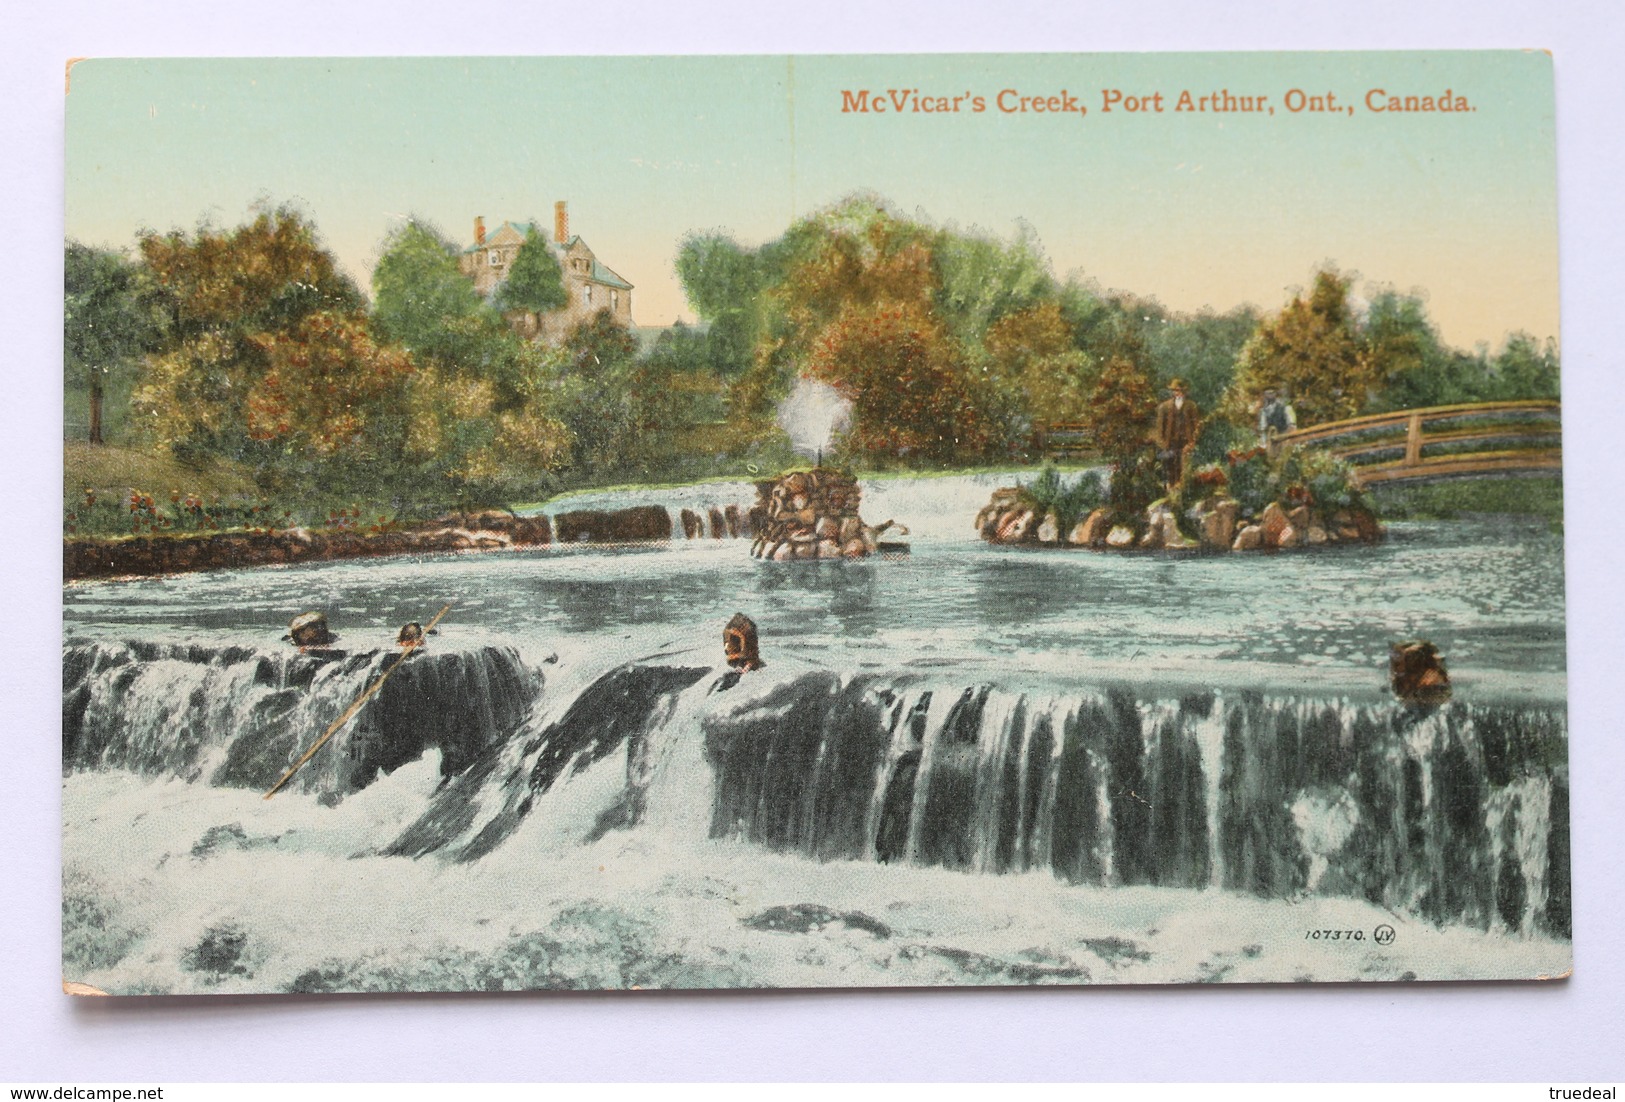 McVicar's Creek, Port Arthur, Ontario, Canada - Port Arthur